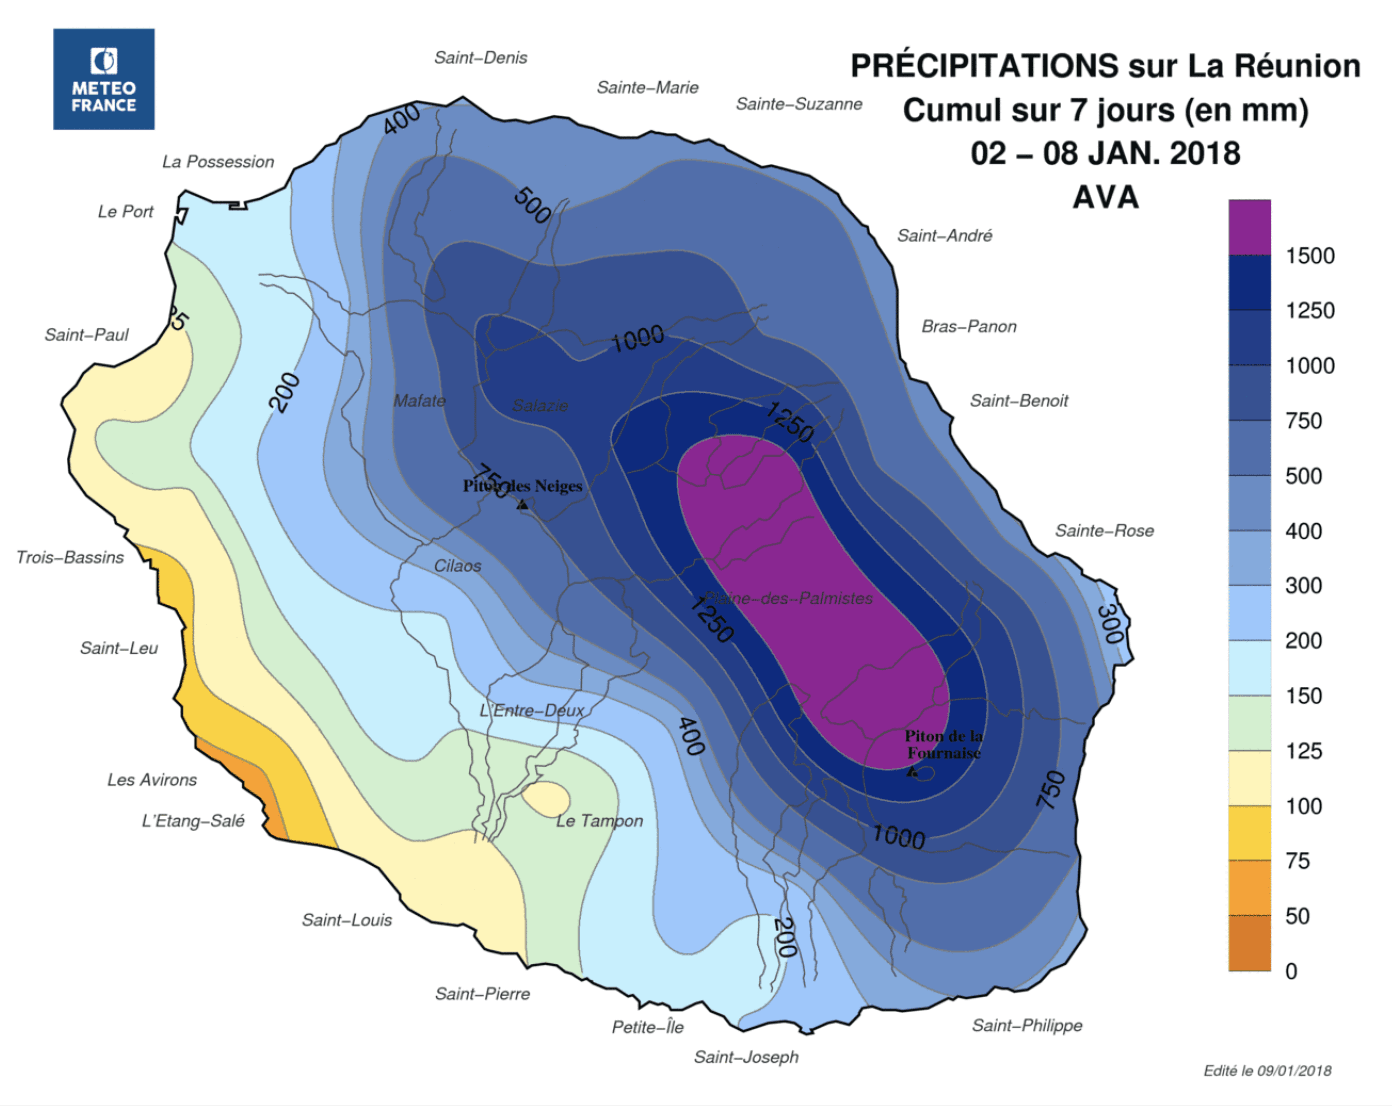 Precipitations-Réunion-AVA